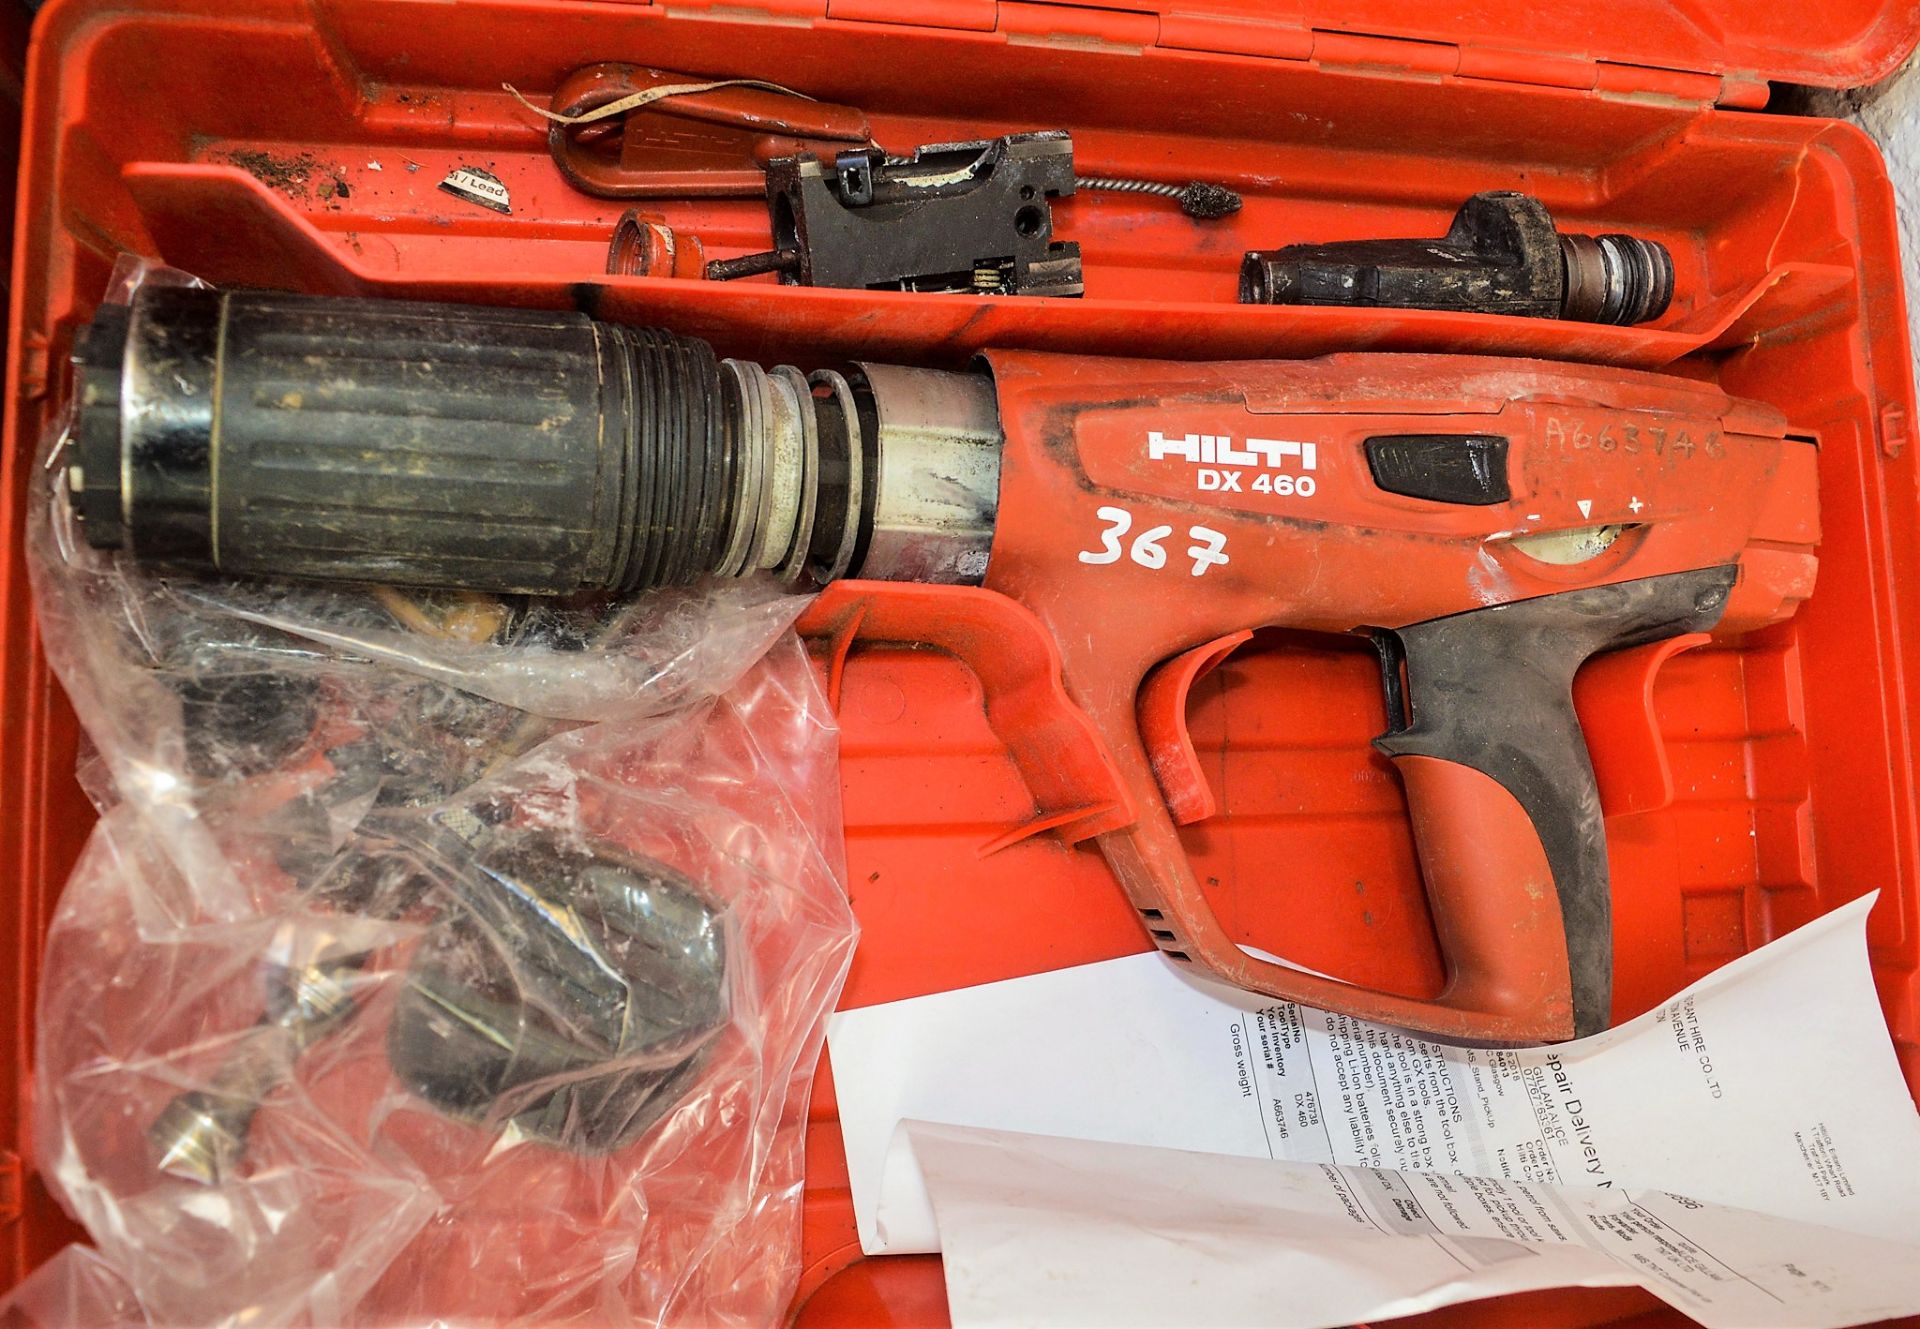 Hilti DX460 nail gun for spares c/w carry case A663746